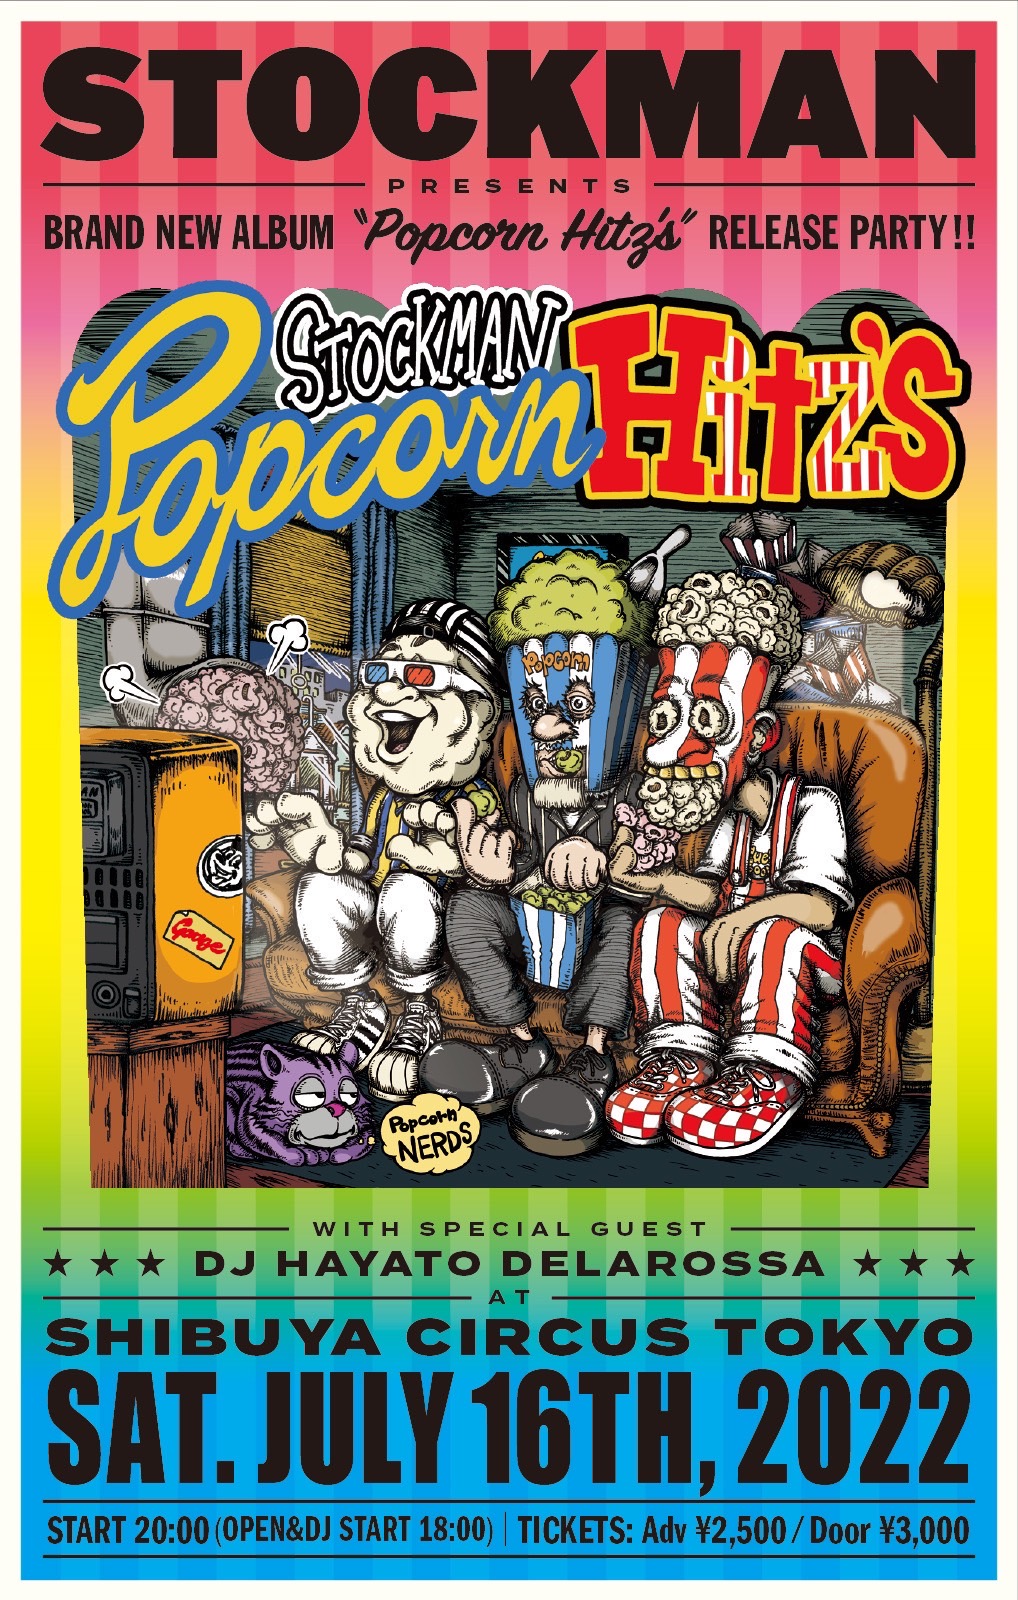 STOCKMAN Presents “Popcorn Hitz’s” Release Party 7/16(土) at 渋谷CIRCUS Tokyo